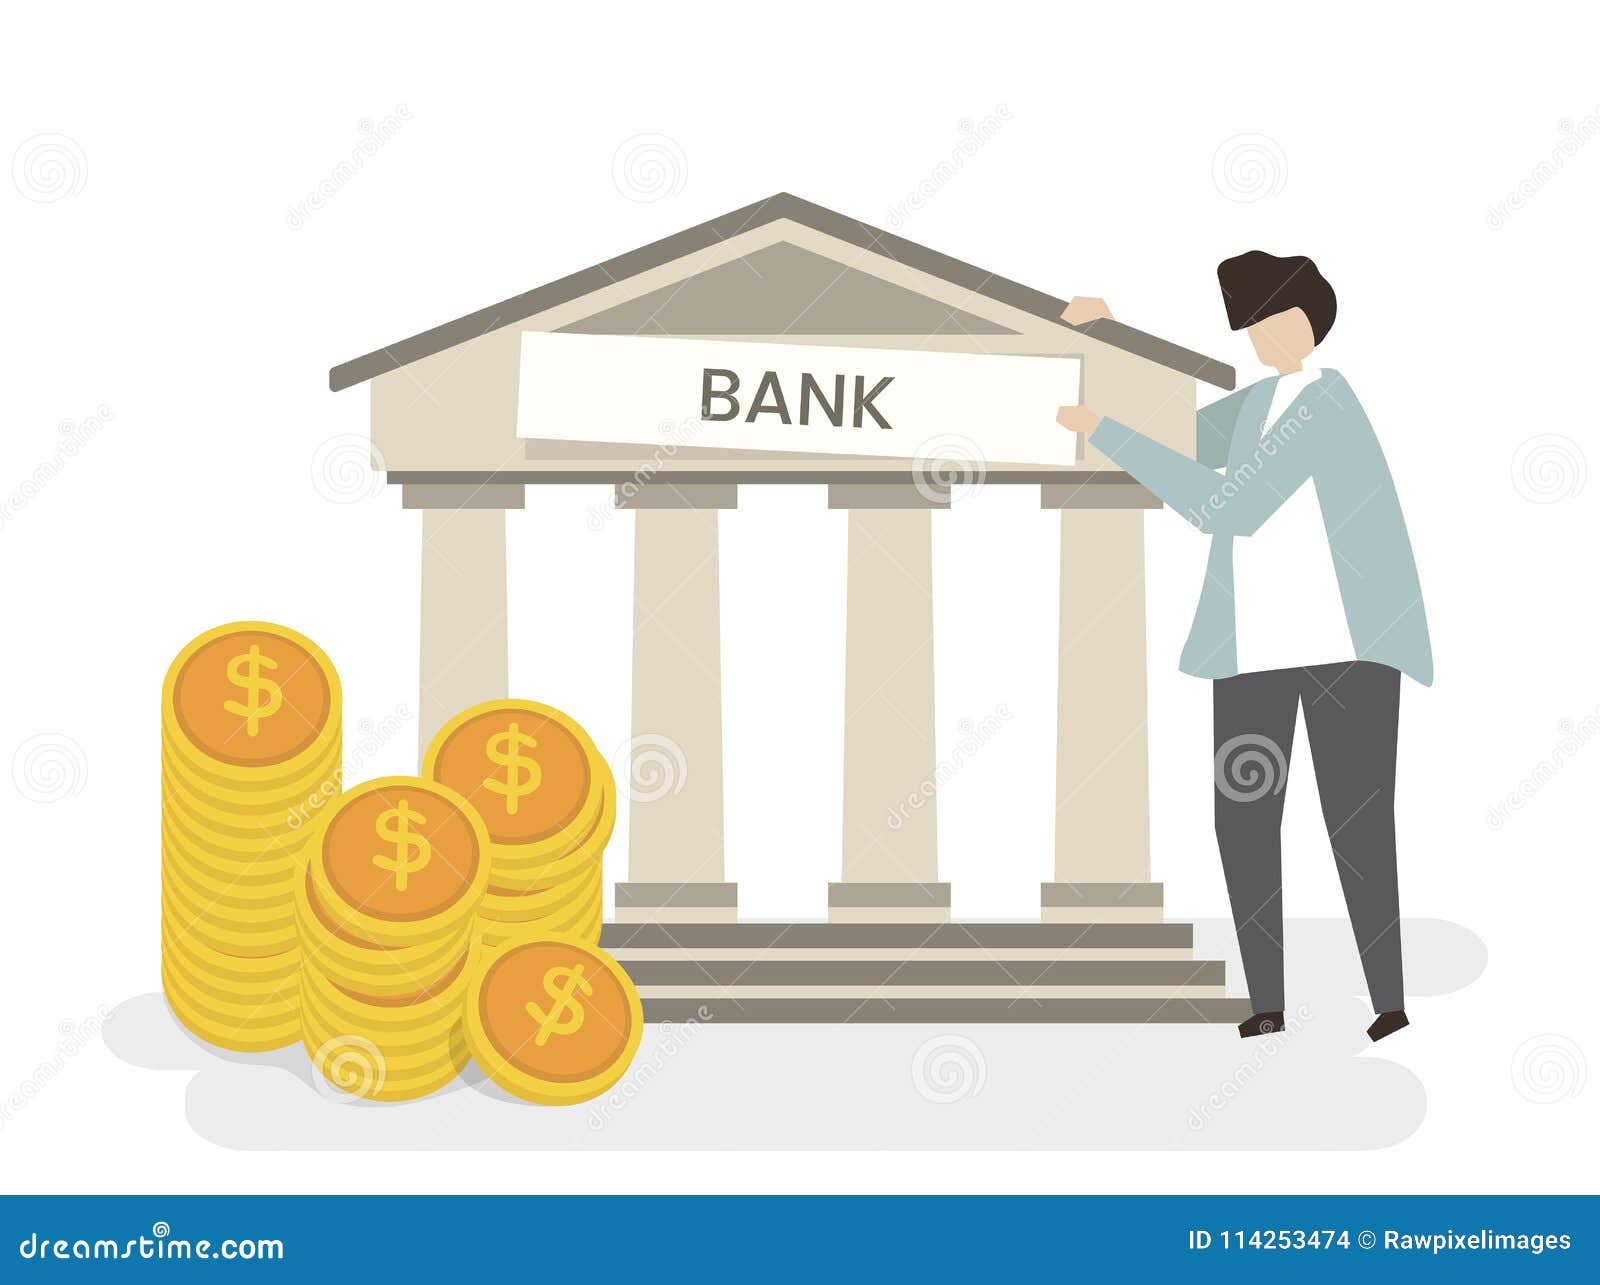 Banking monetary. Банковские иллюстрации. Банк рисунок. Векторные иллюстрации банк. Рисунок на тему банк.